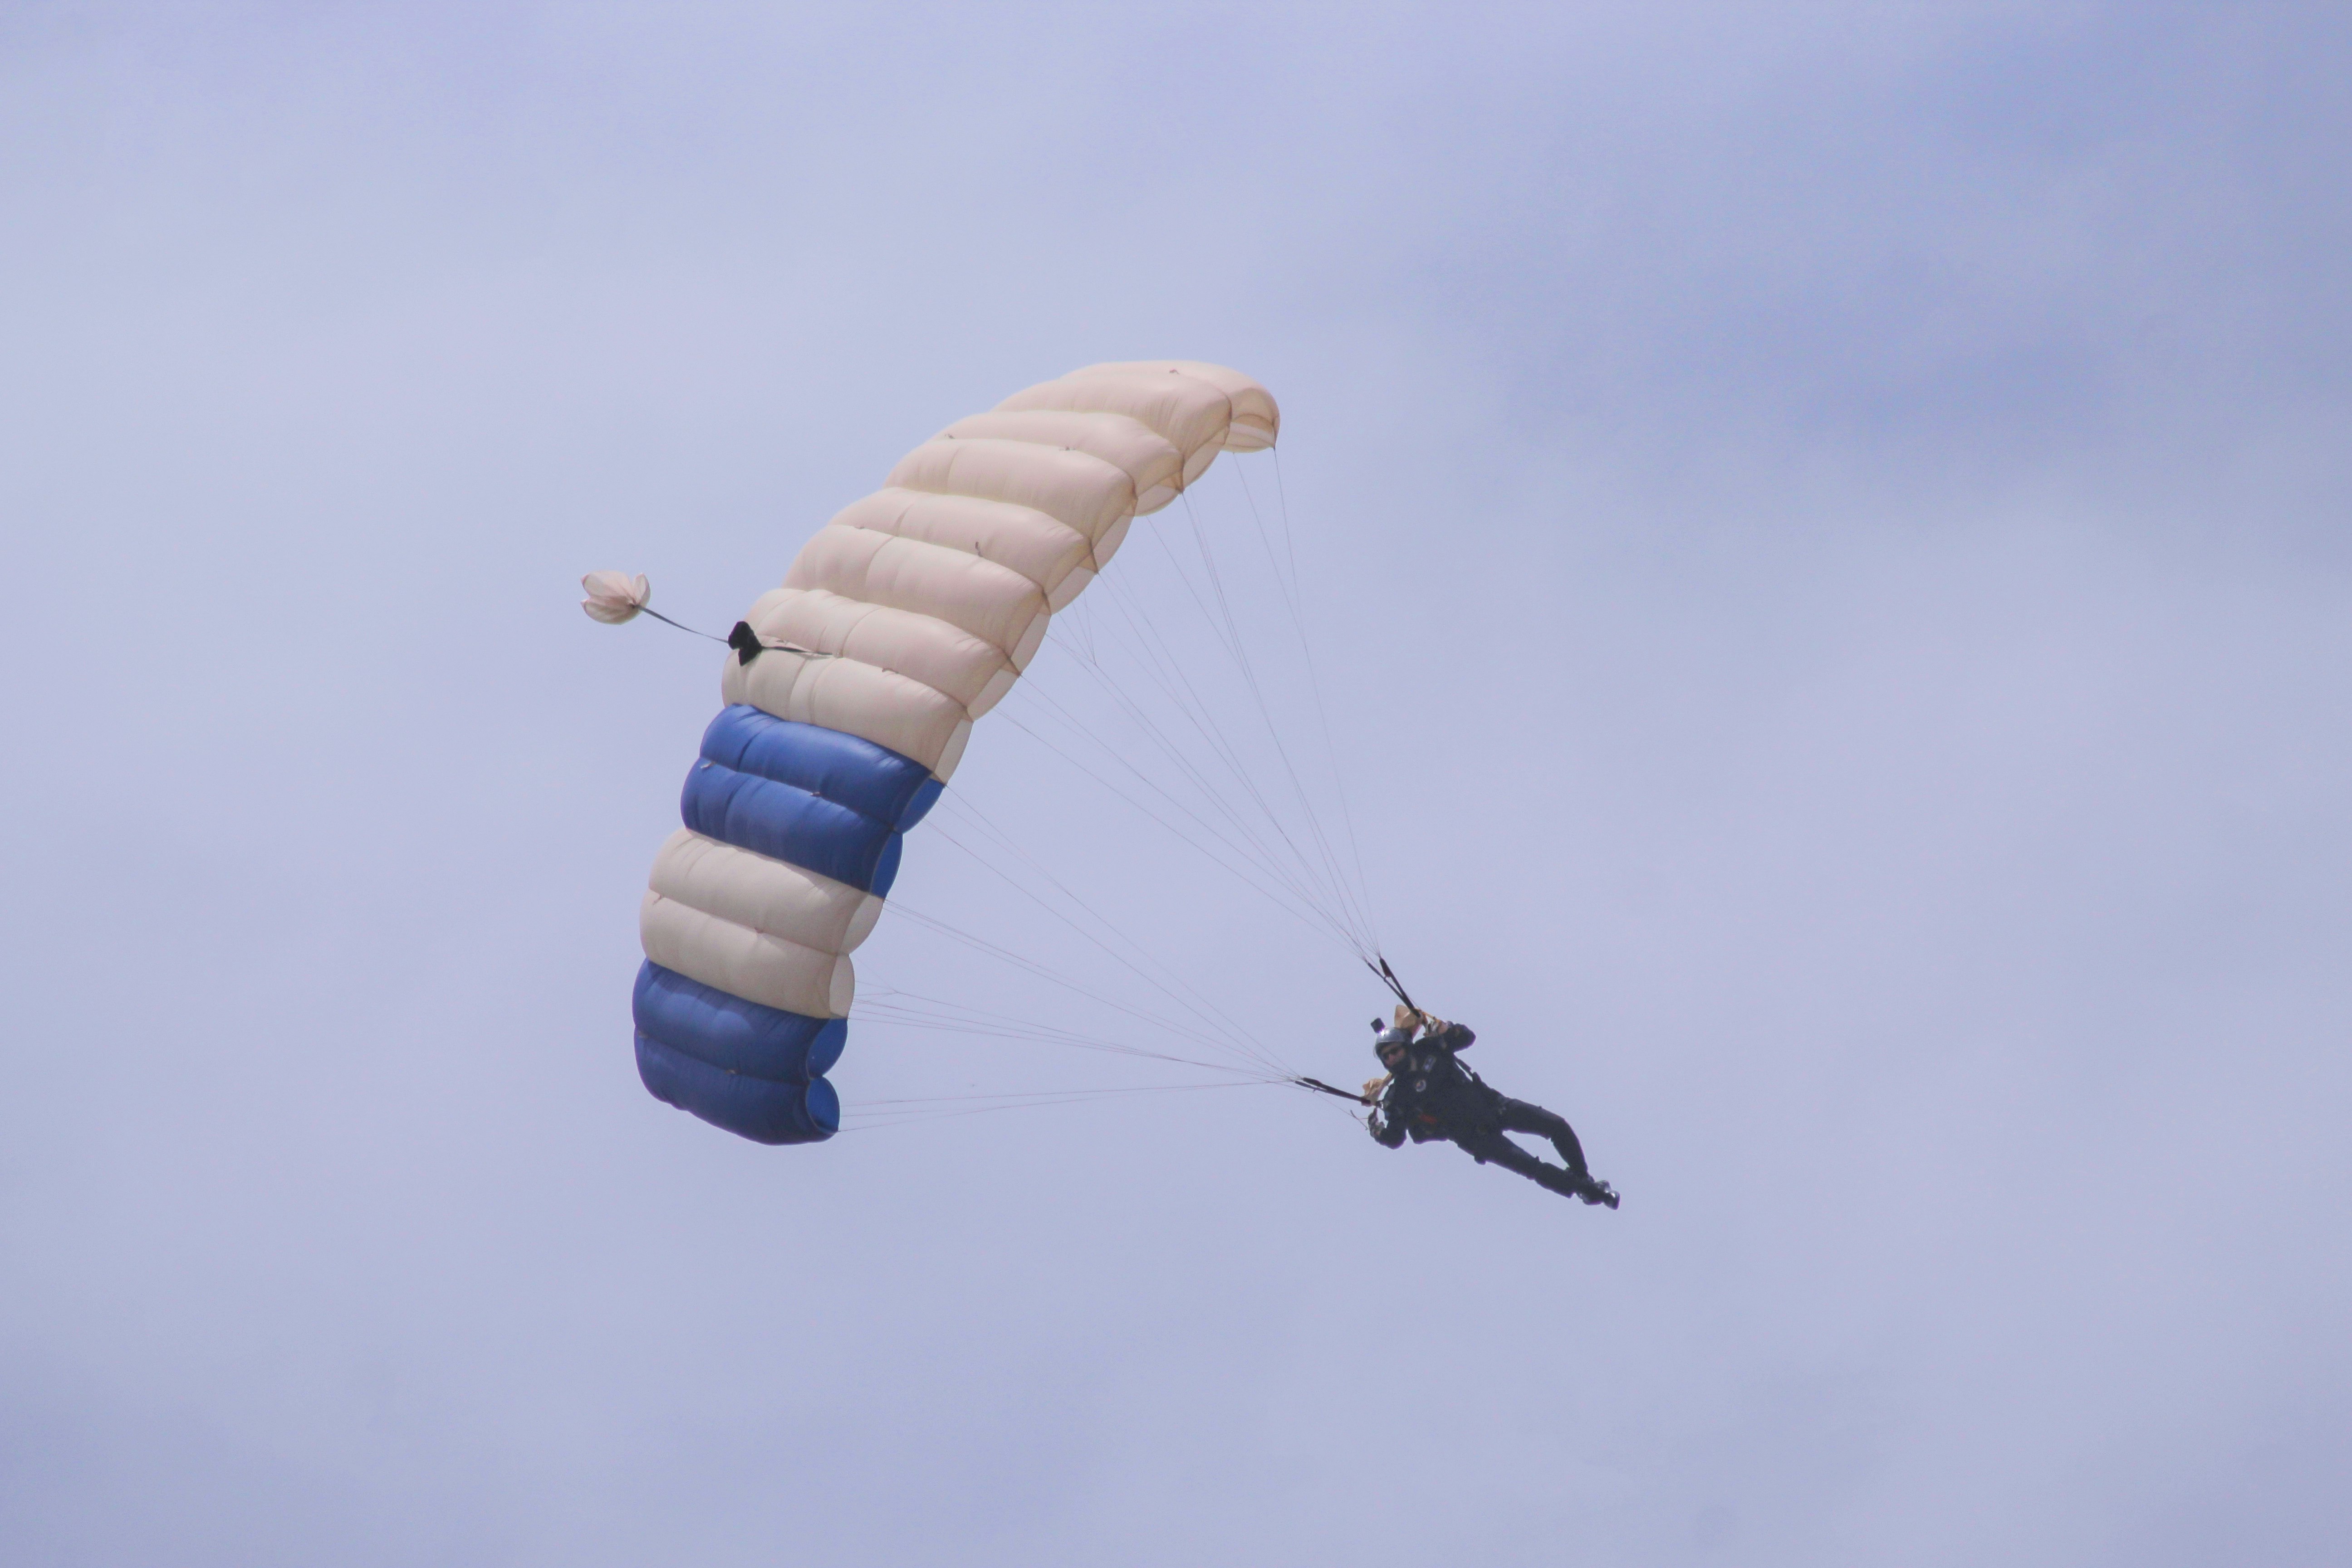 man doing paragliding